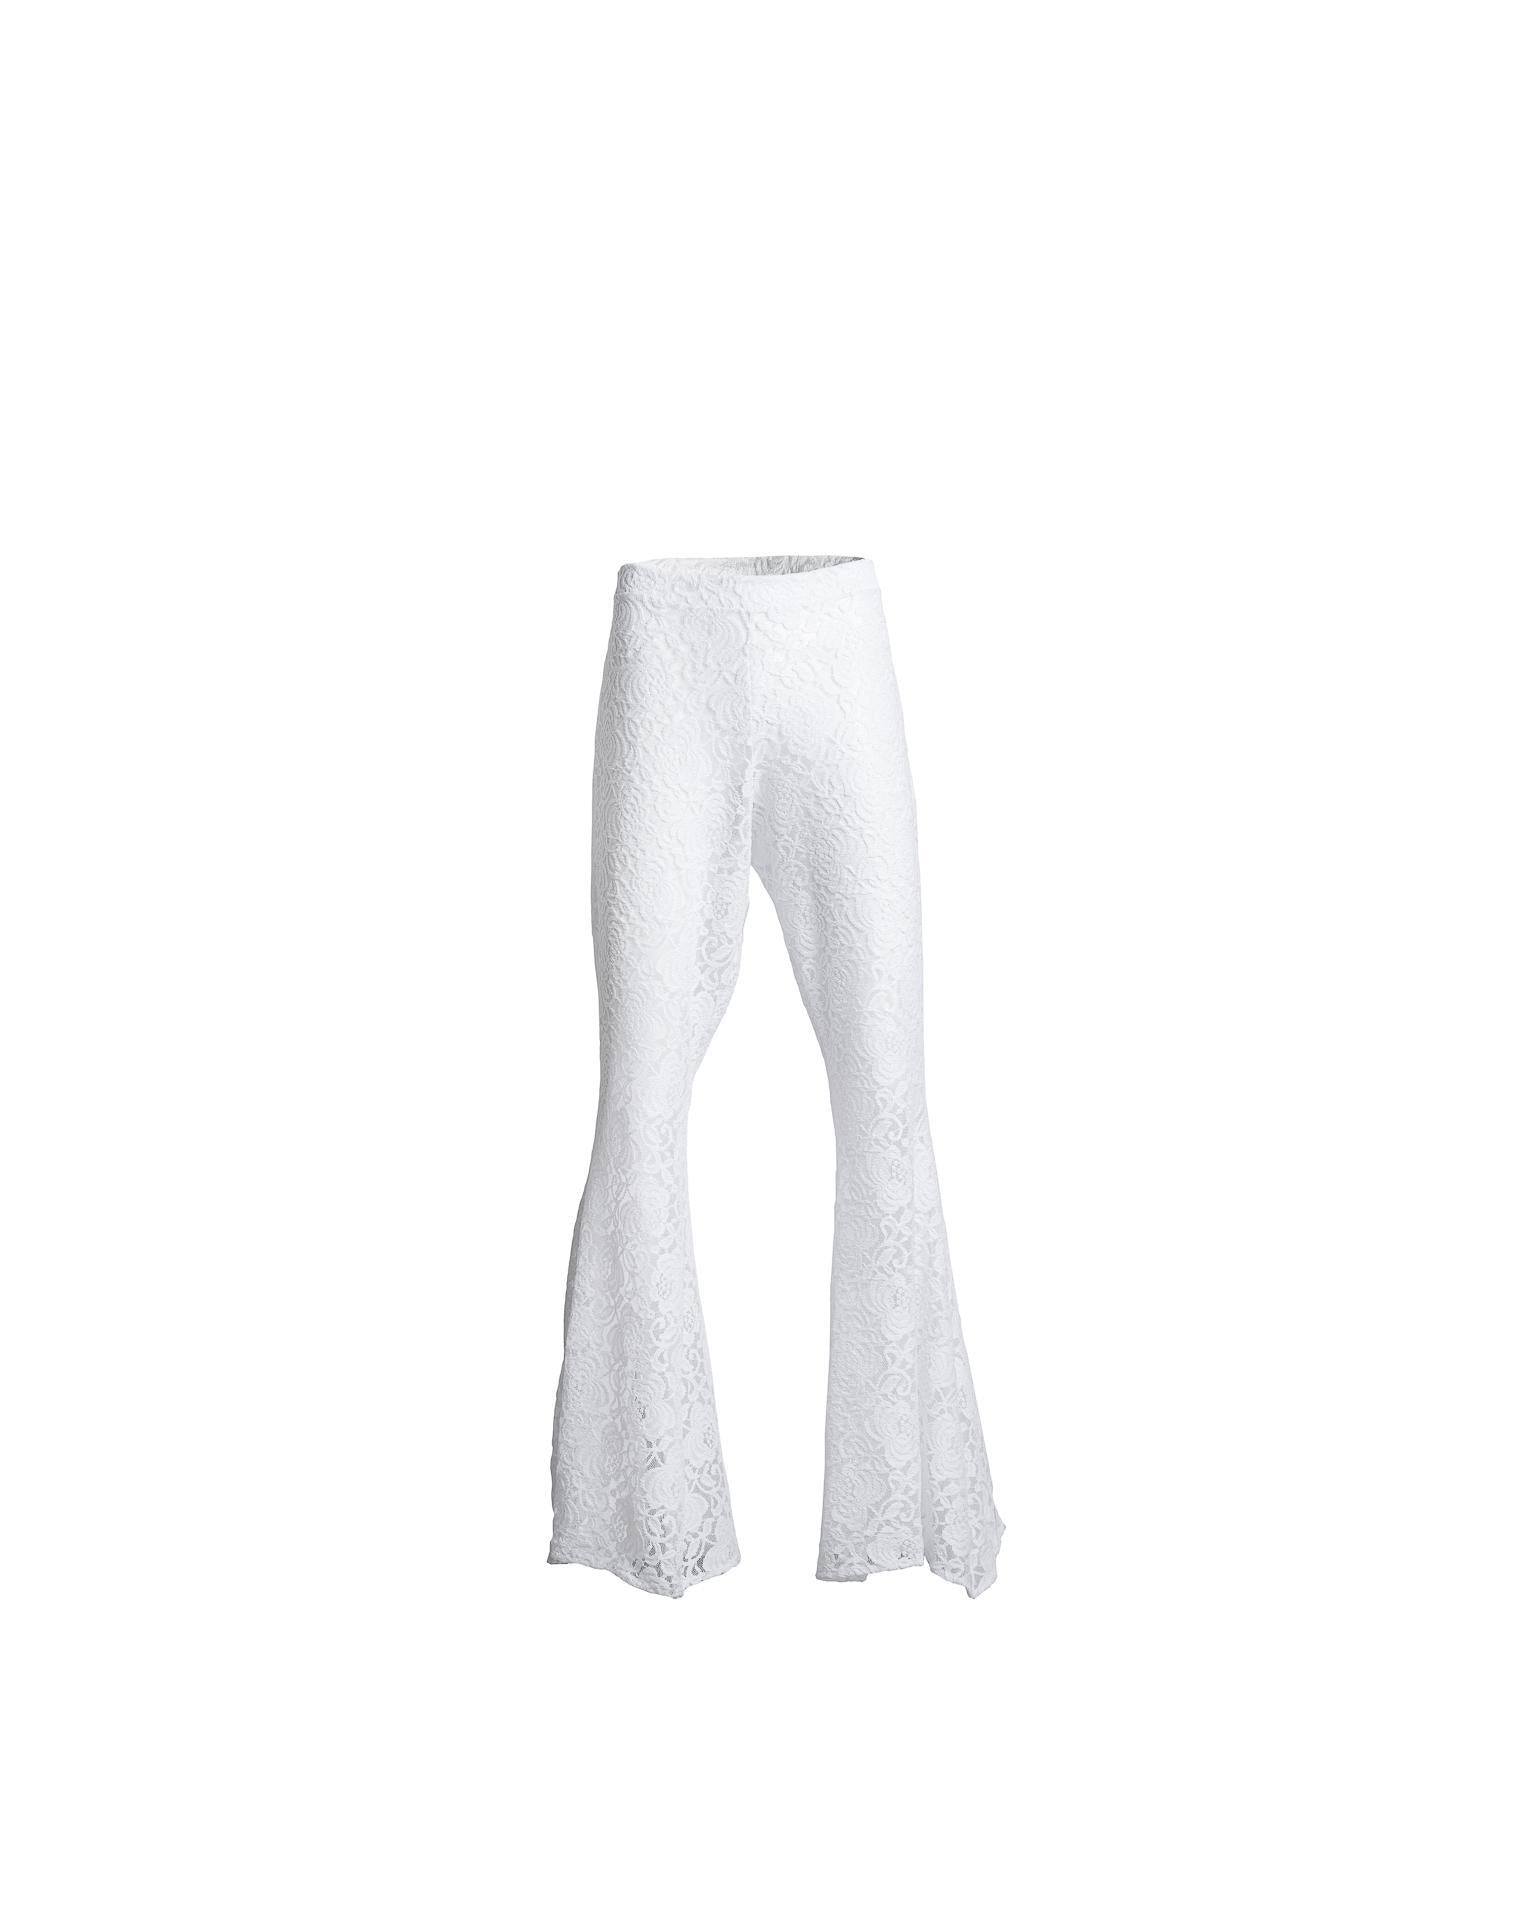 Antigua Party Pants White Lace